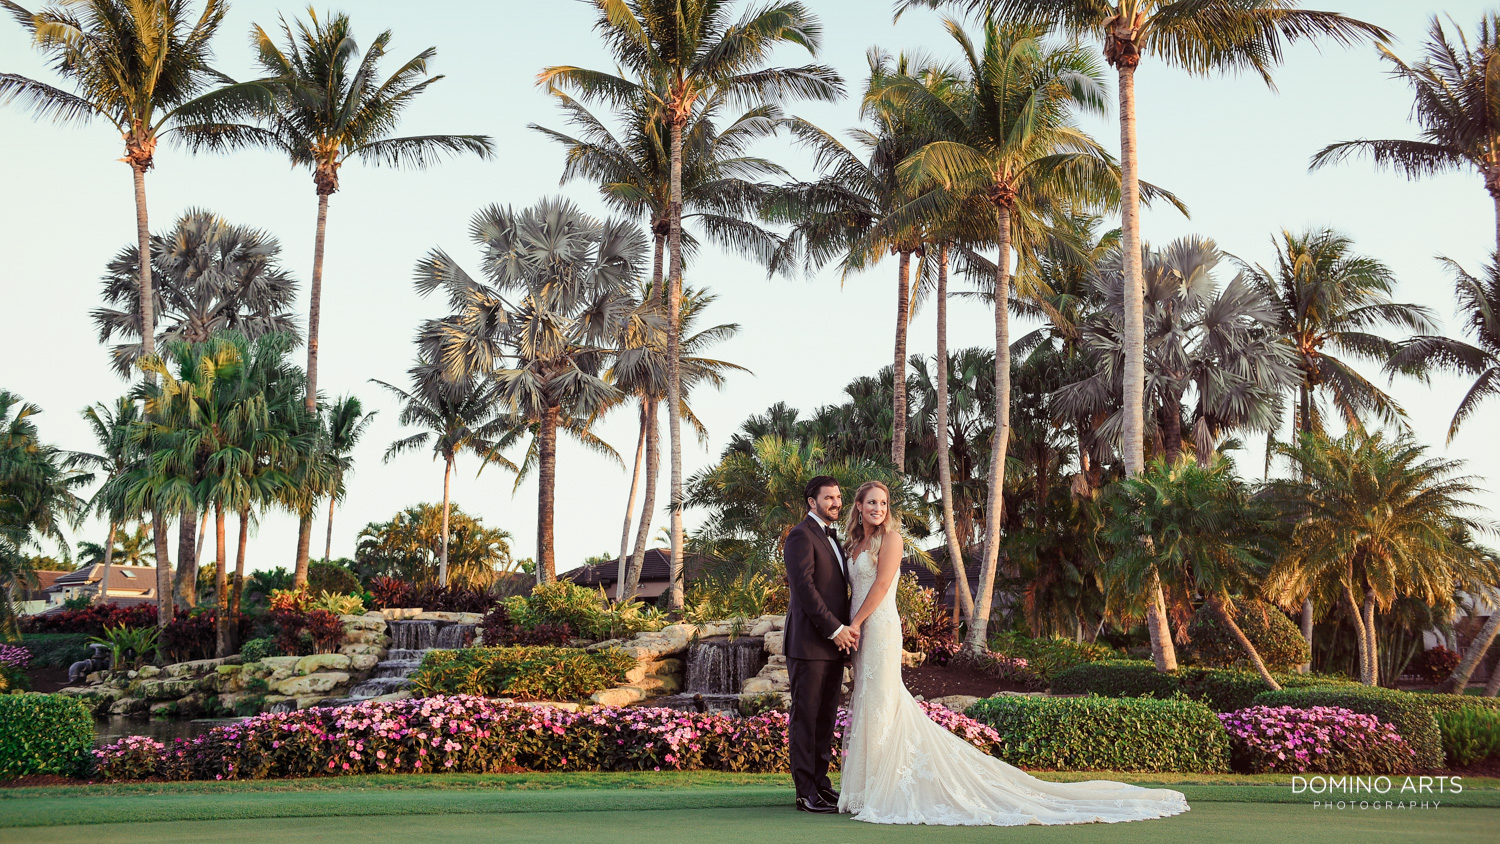 Luxury lifestyle wedding photography at The Polo Club, Boca Raton, Florida